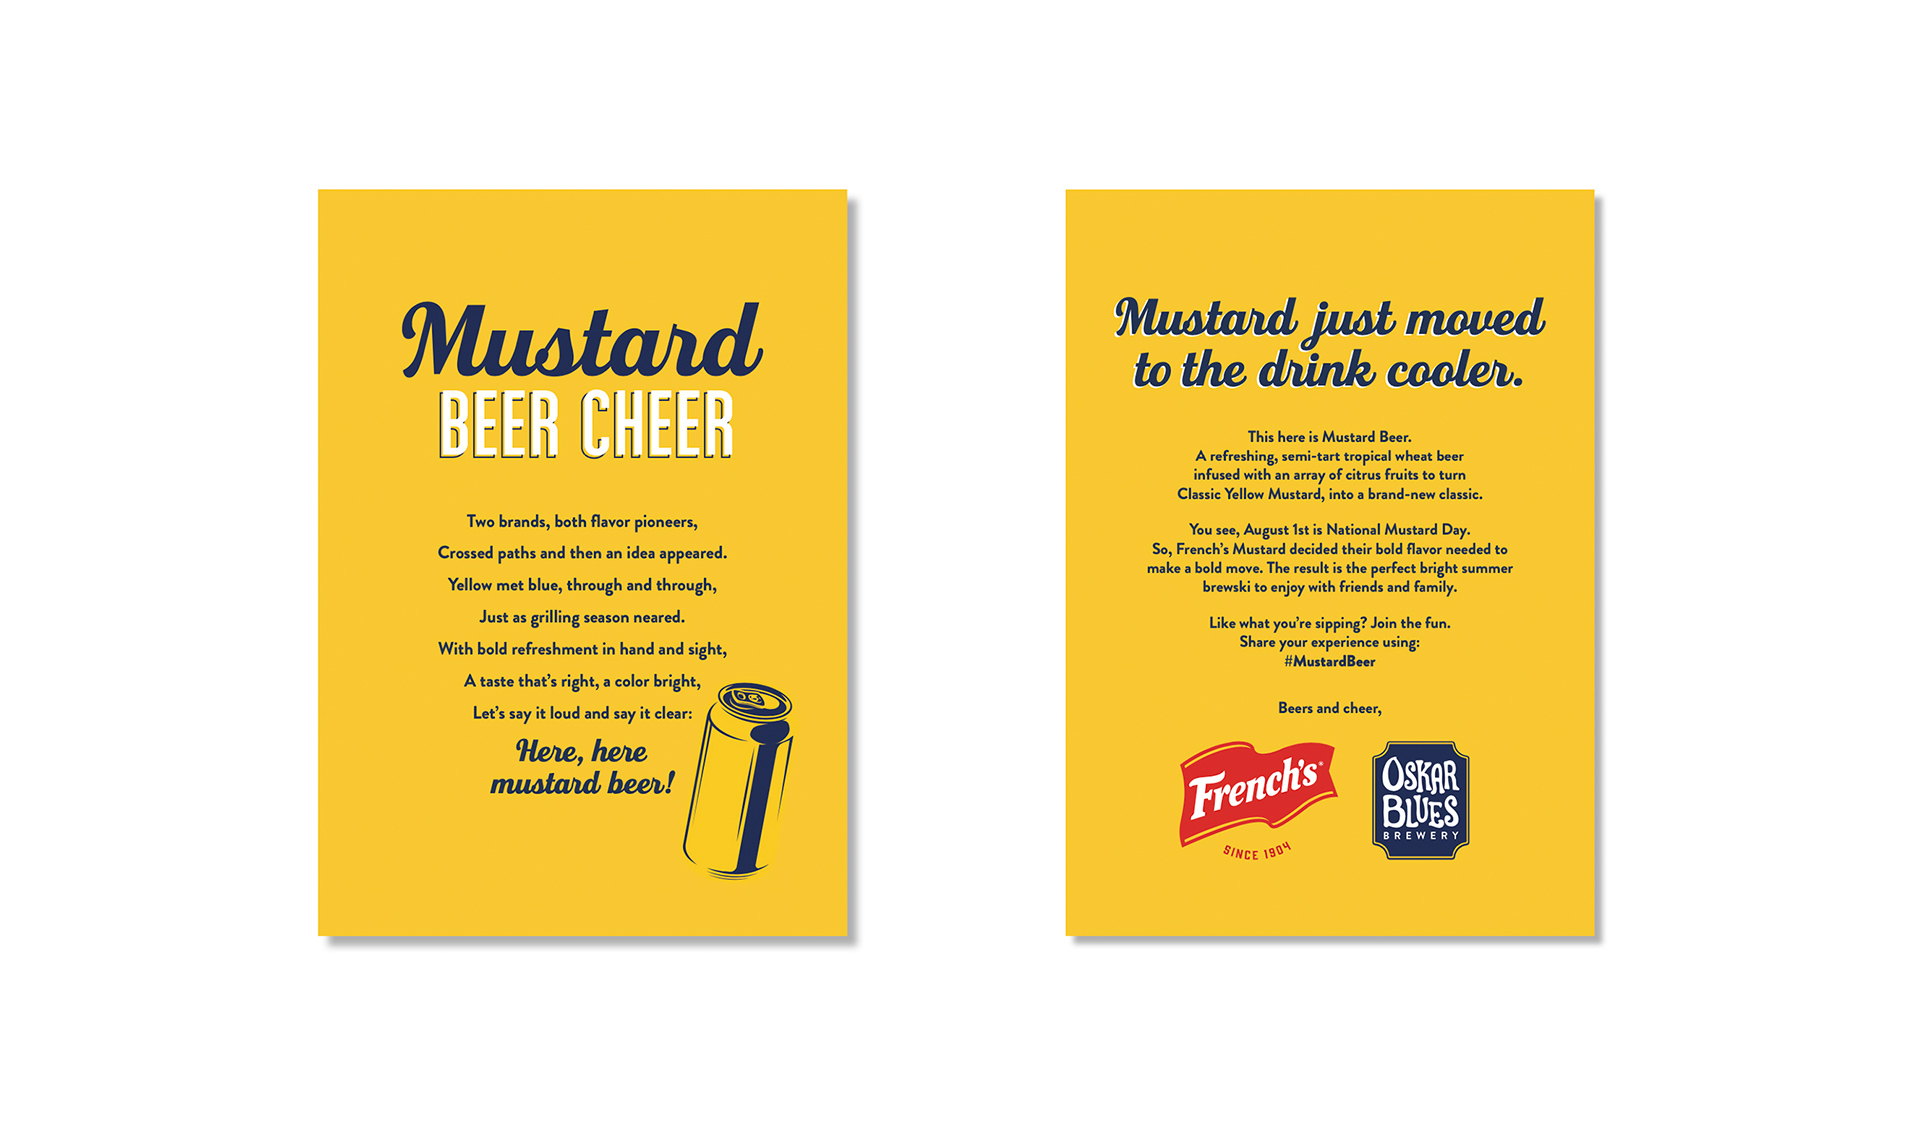 Mustard beer posters